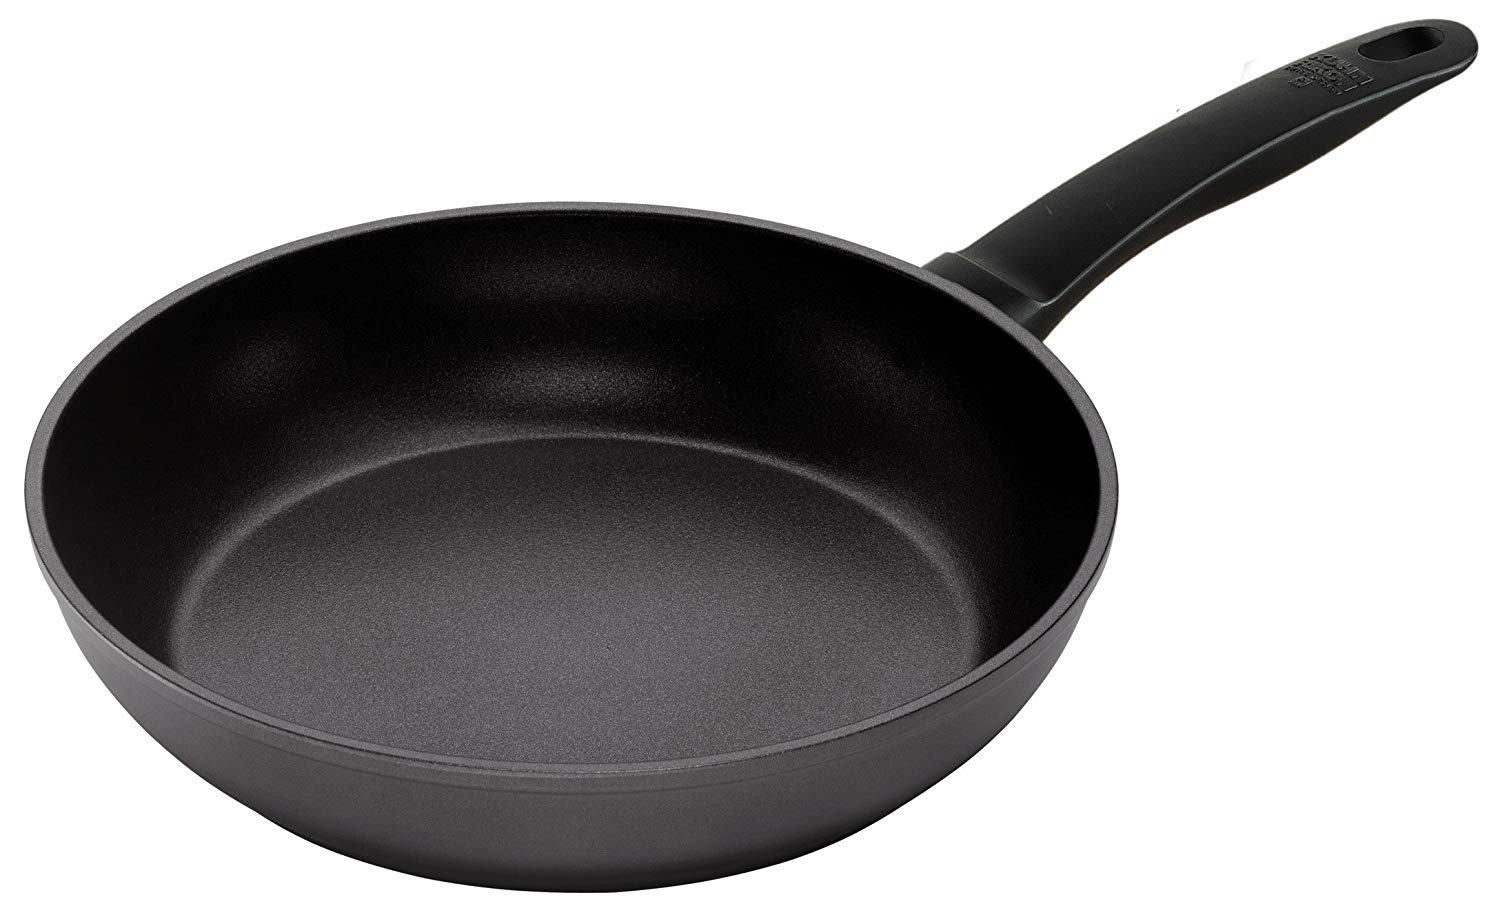 Kuhn Rikon 24 Cm Easy Induction Non Stick Frying Pan, Black